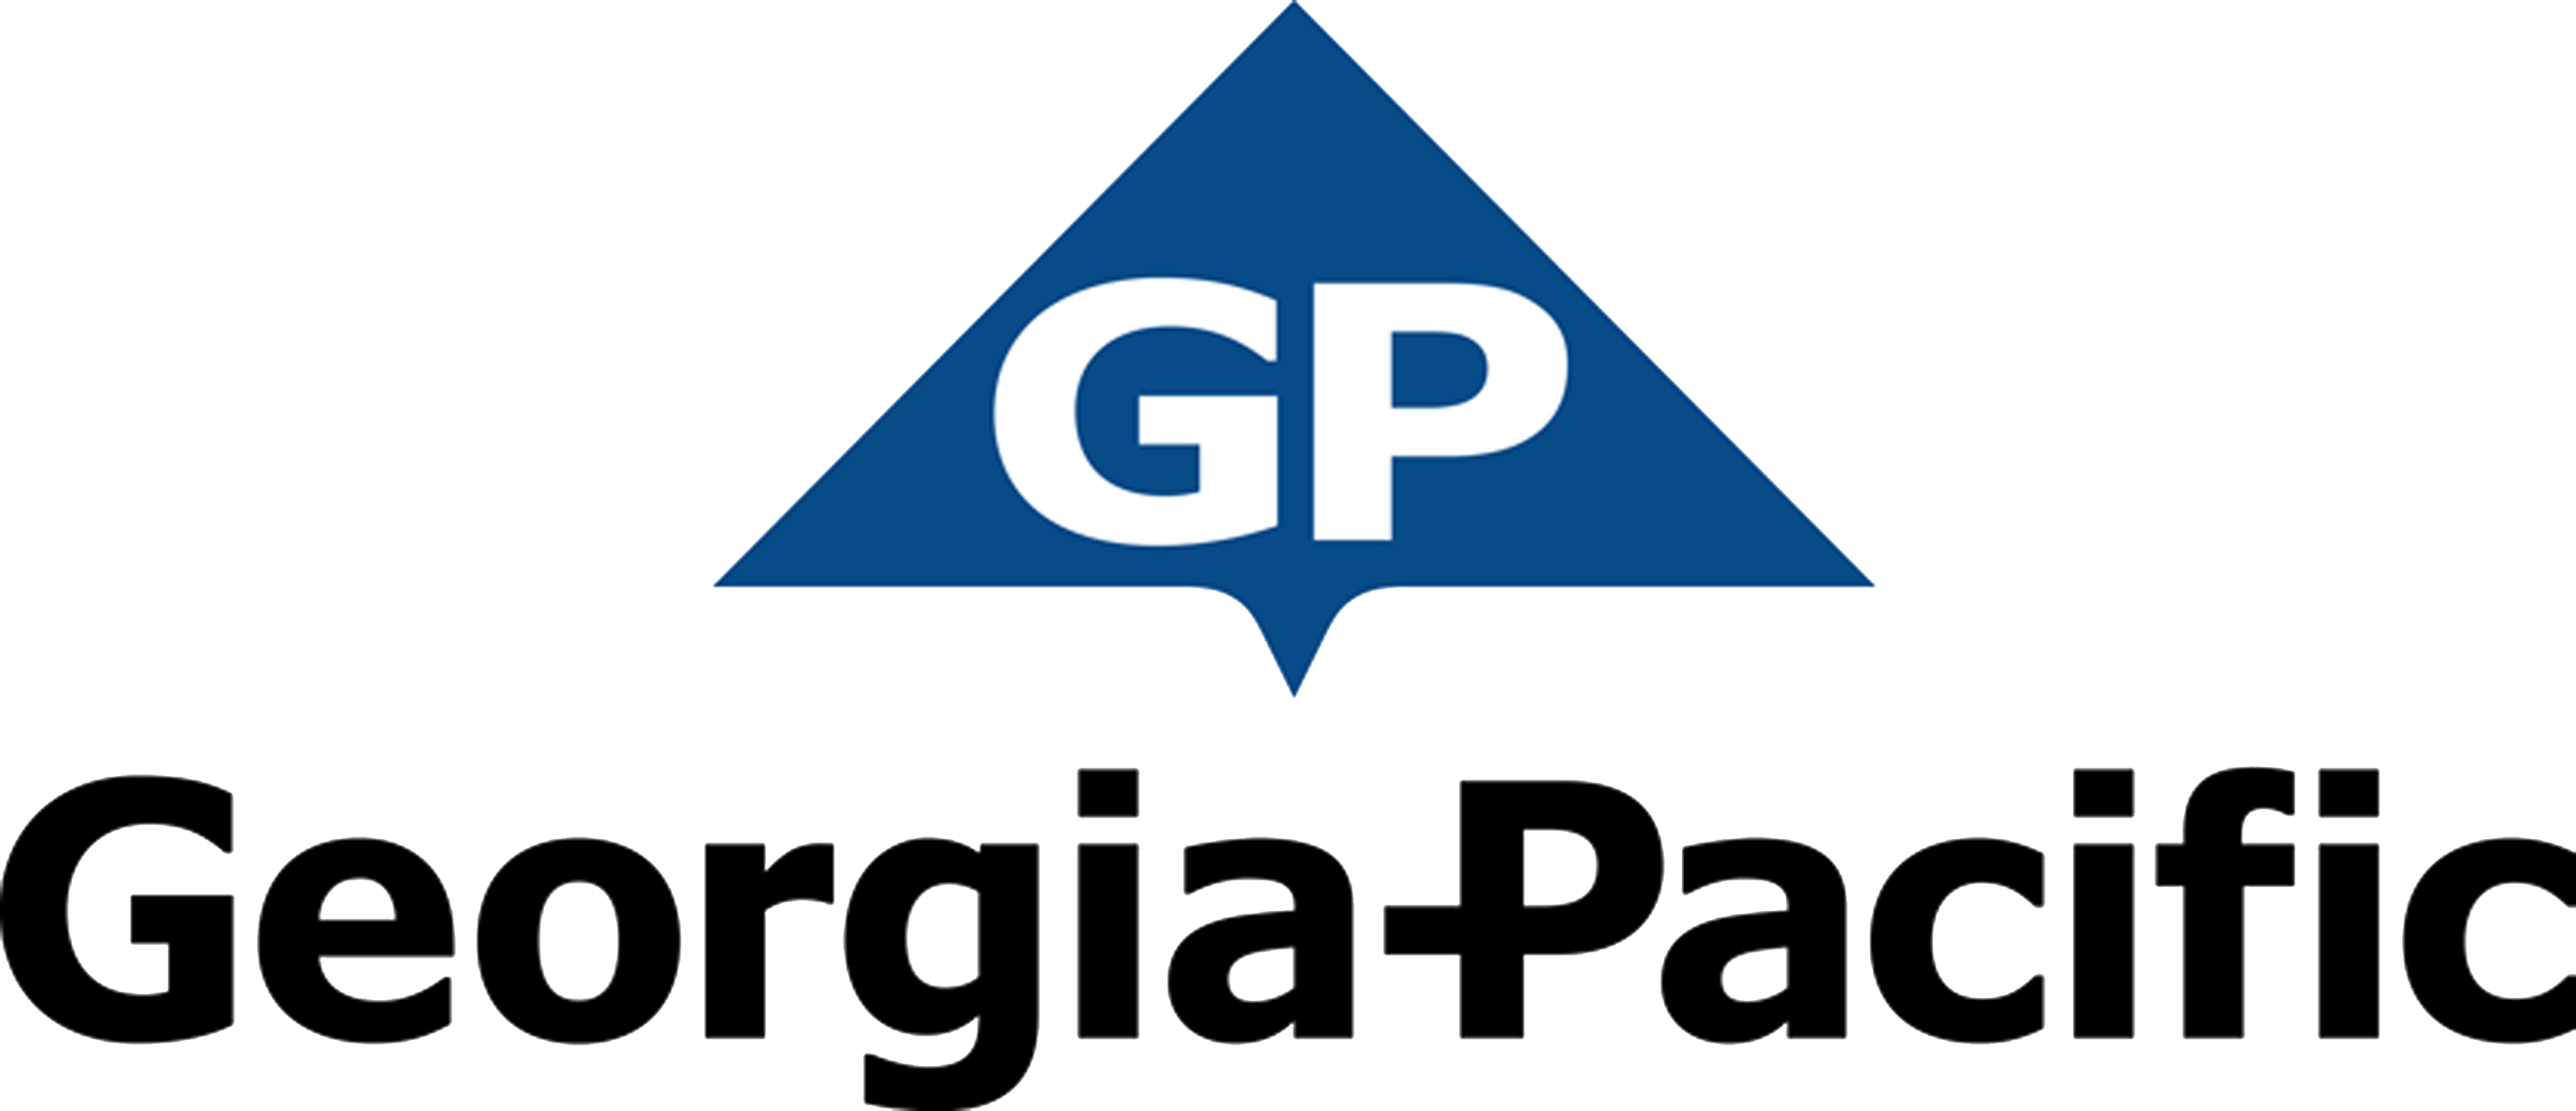 62-624767_georgia-pacific-no-background-georgia-pacific-corp-logo